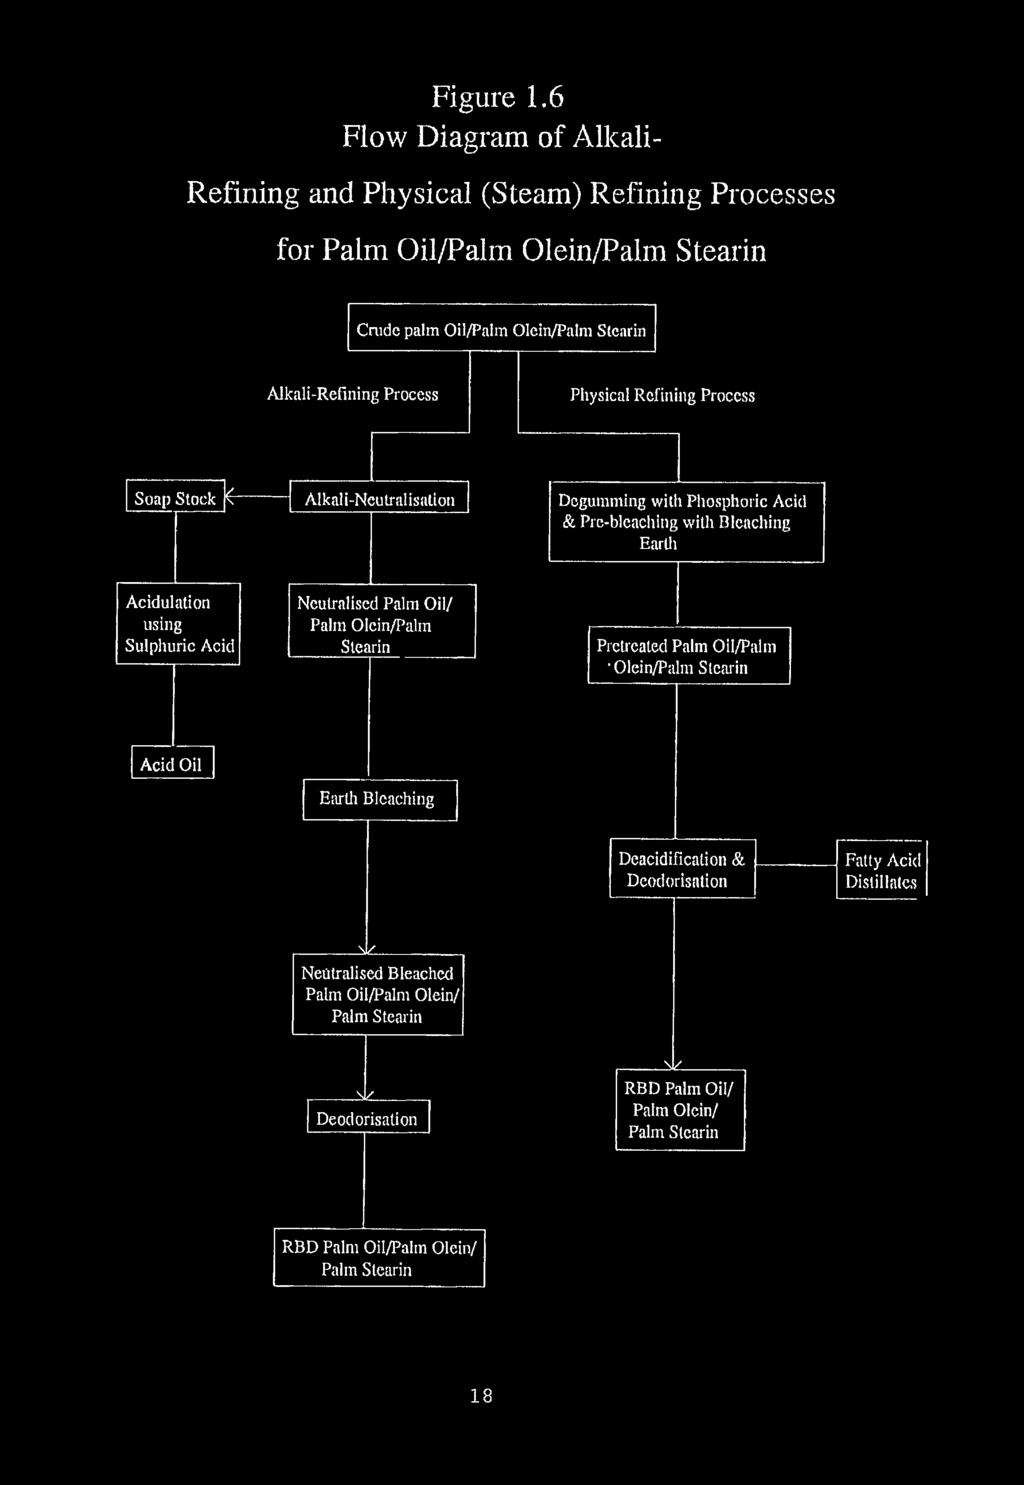 Sulphuric Acid Neutralised Palm Oil/ Palin Olein/Palm Stearin Prctrealed Palm Oil/Palm 'Olein/Palm Stearin Acid